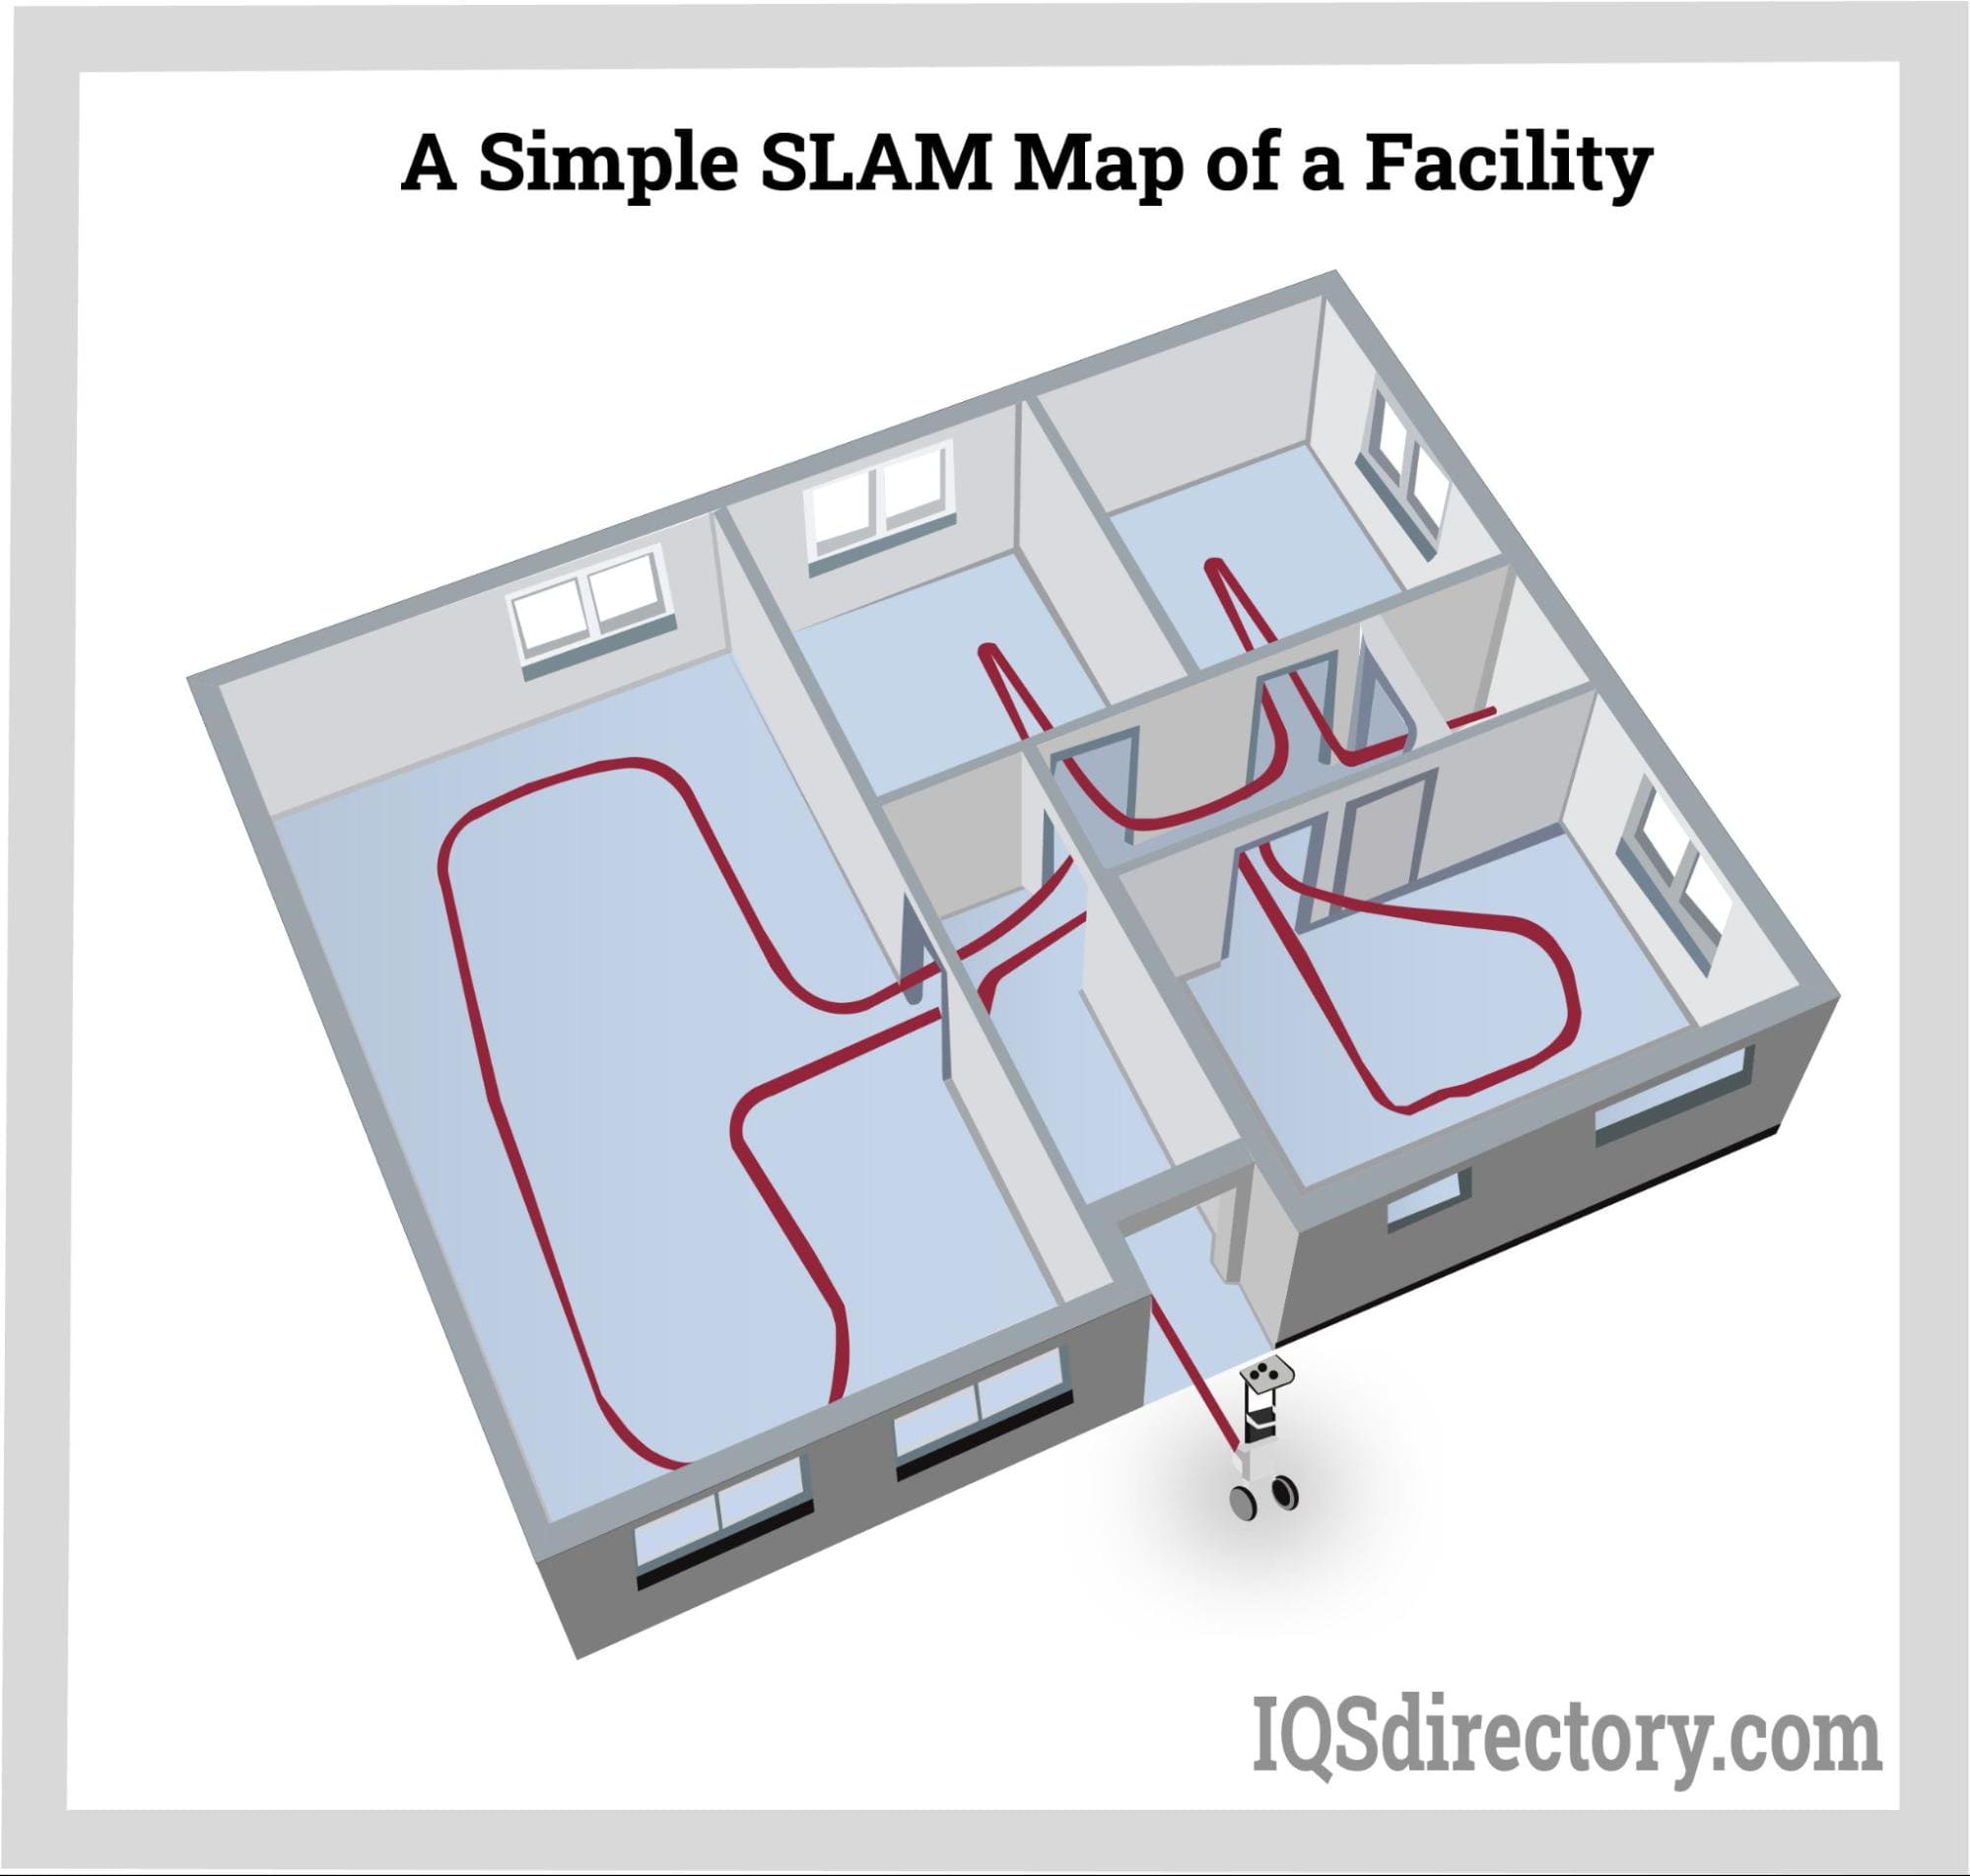 A Simple SLAM Map of a Facility